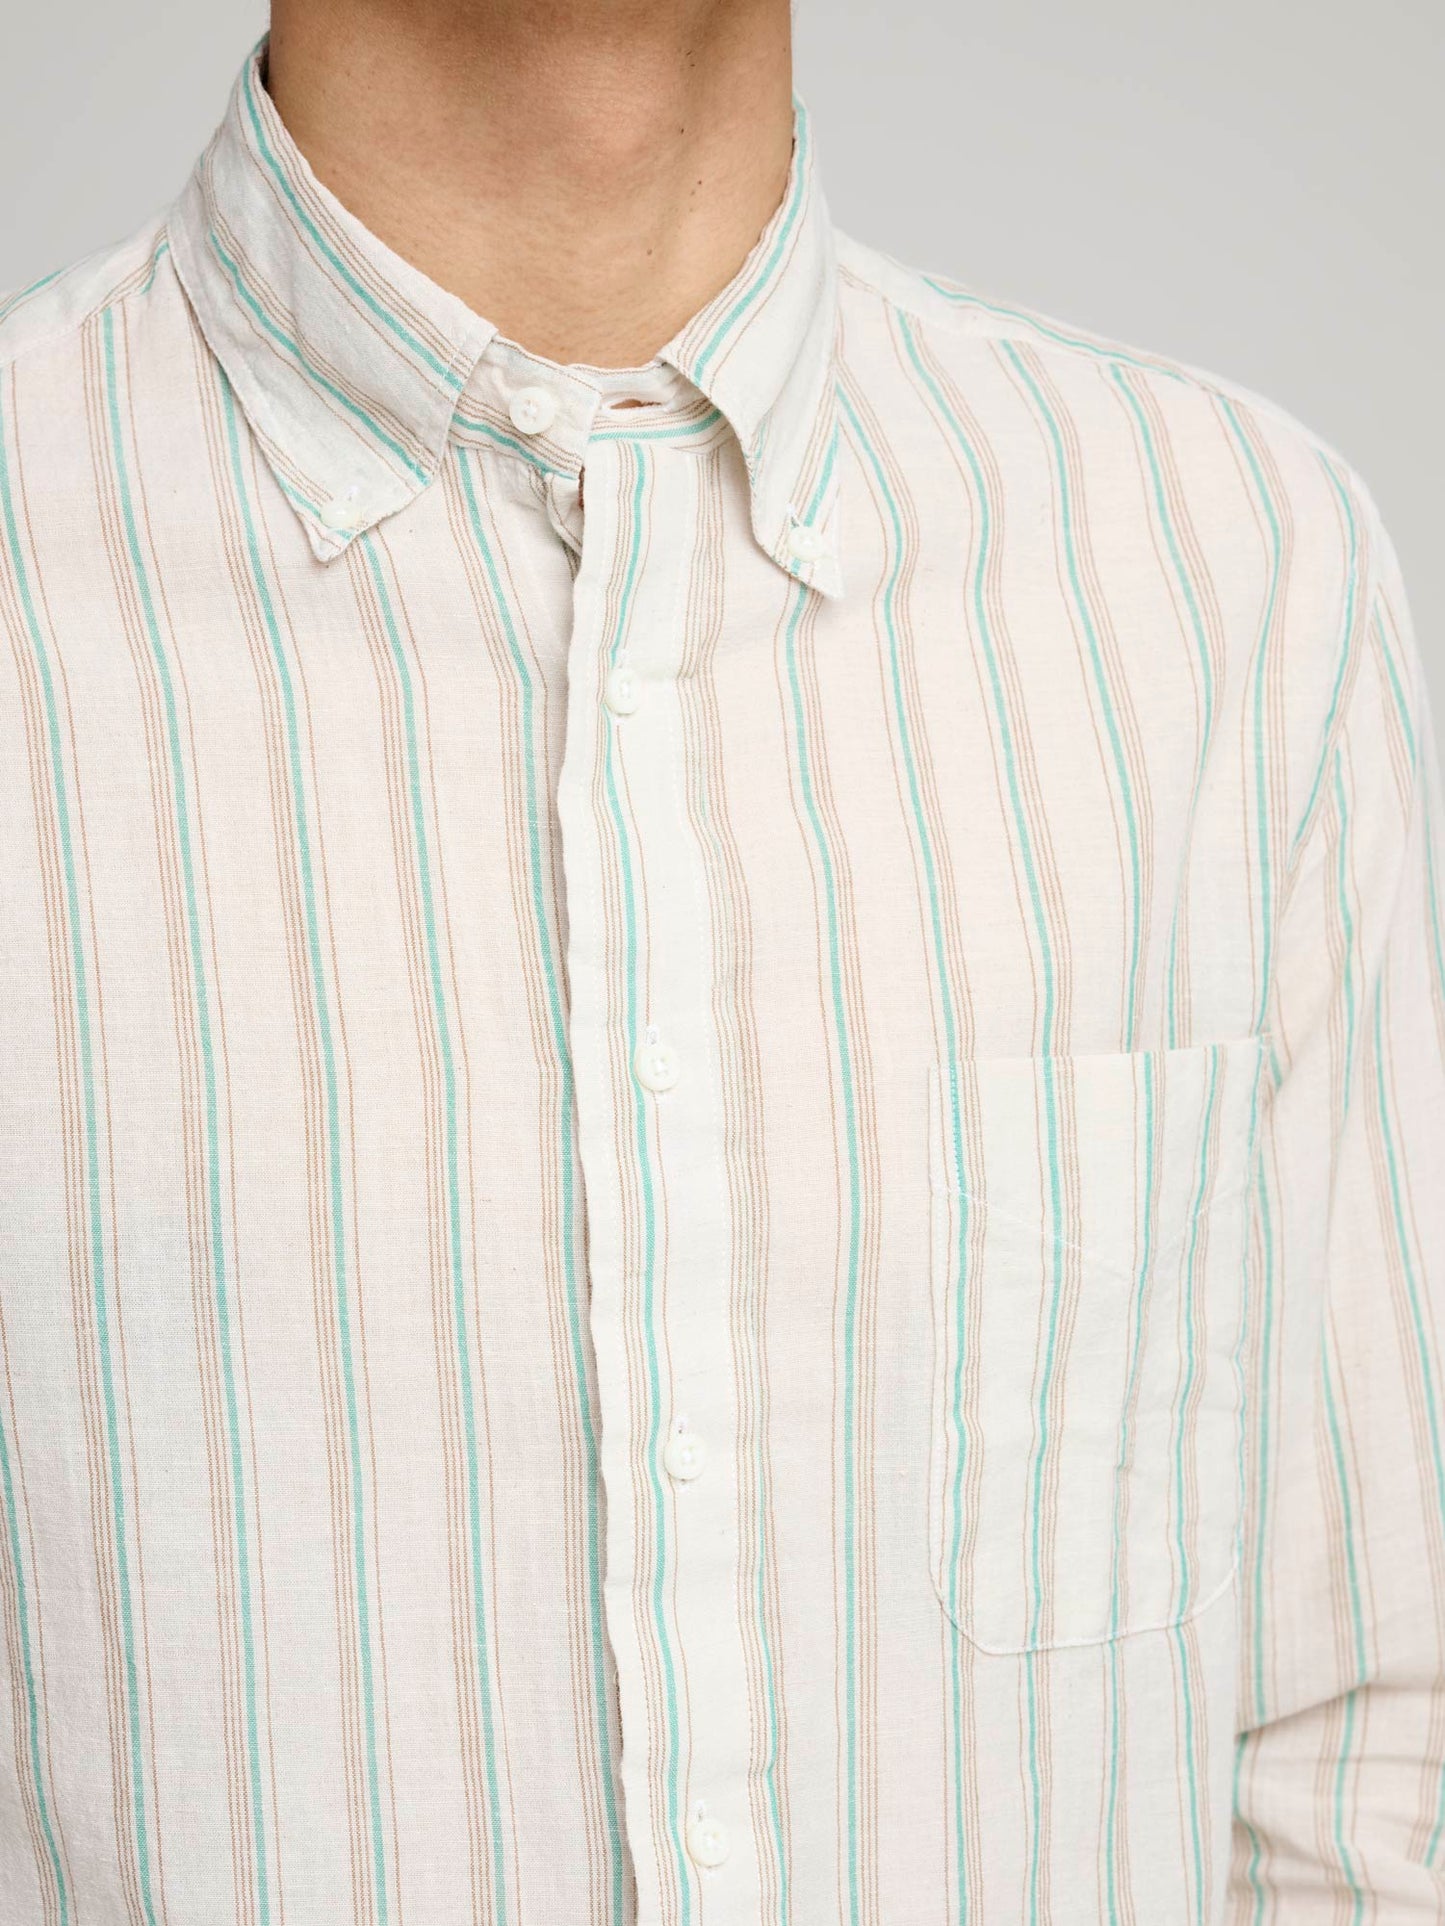 Cabana Stripe Shirt, Tan